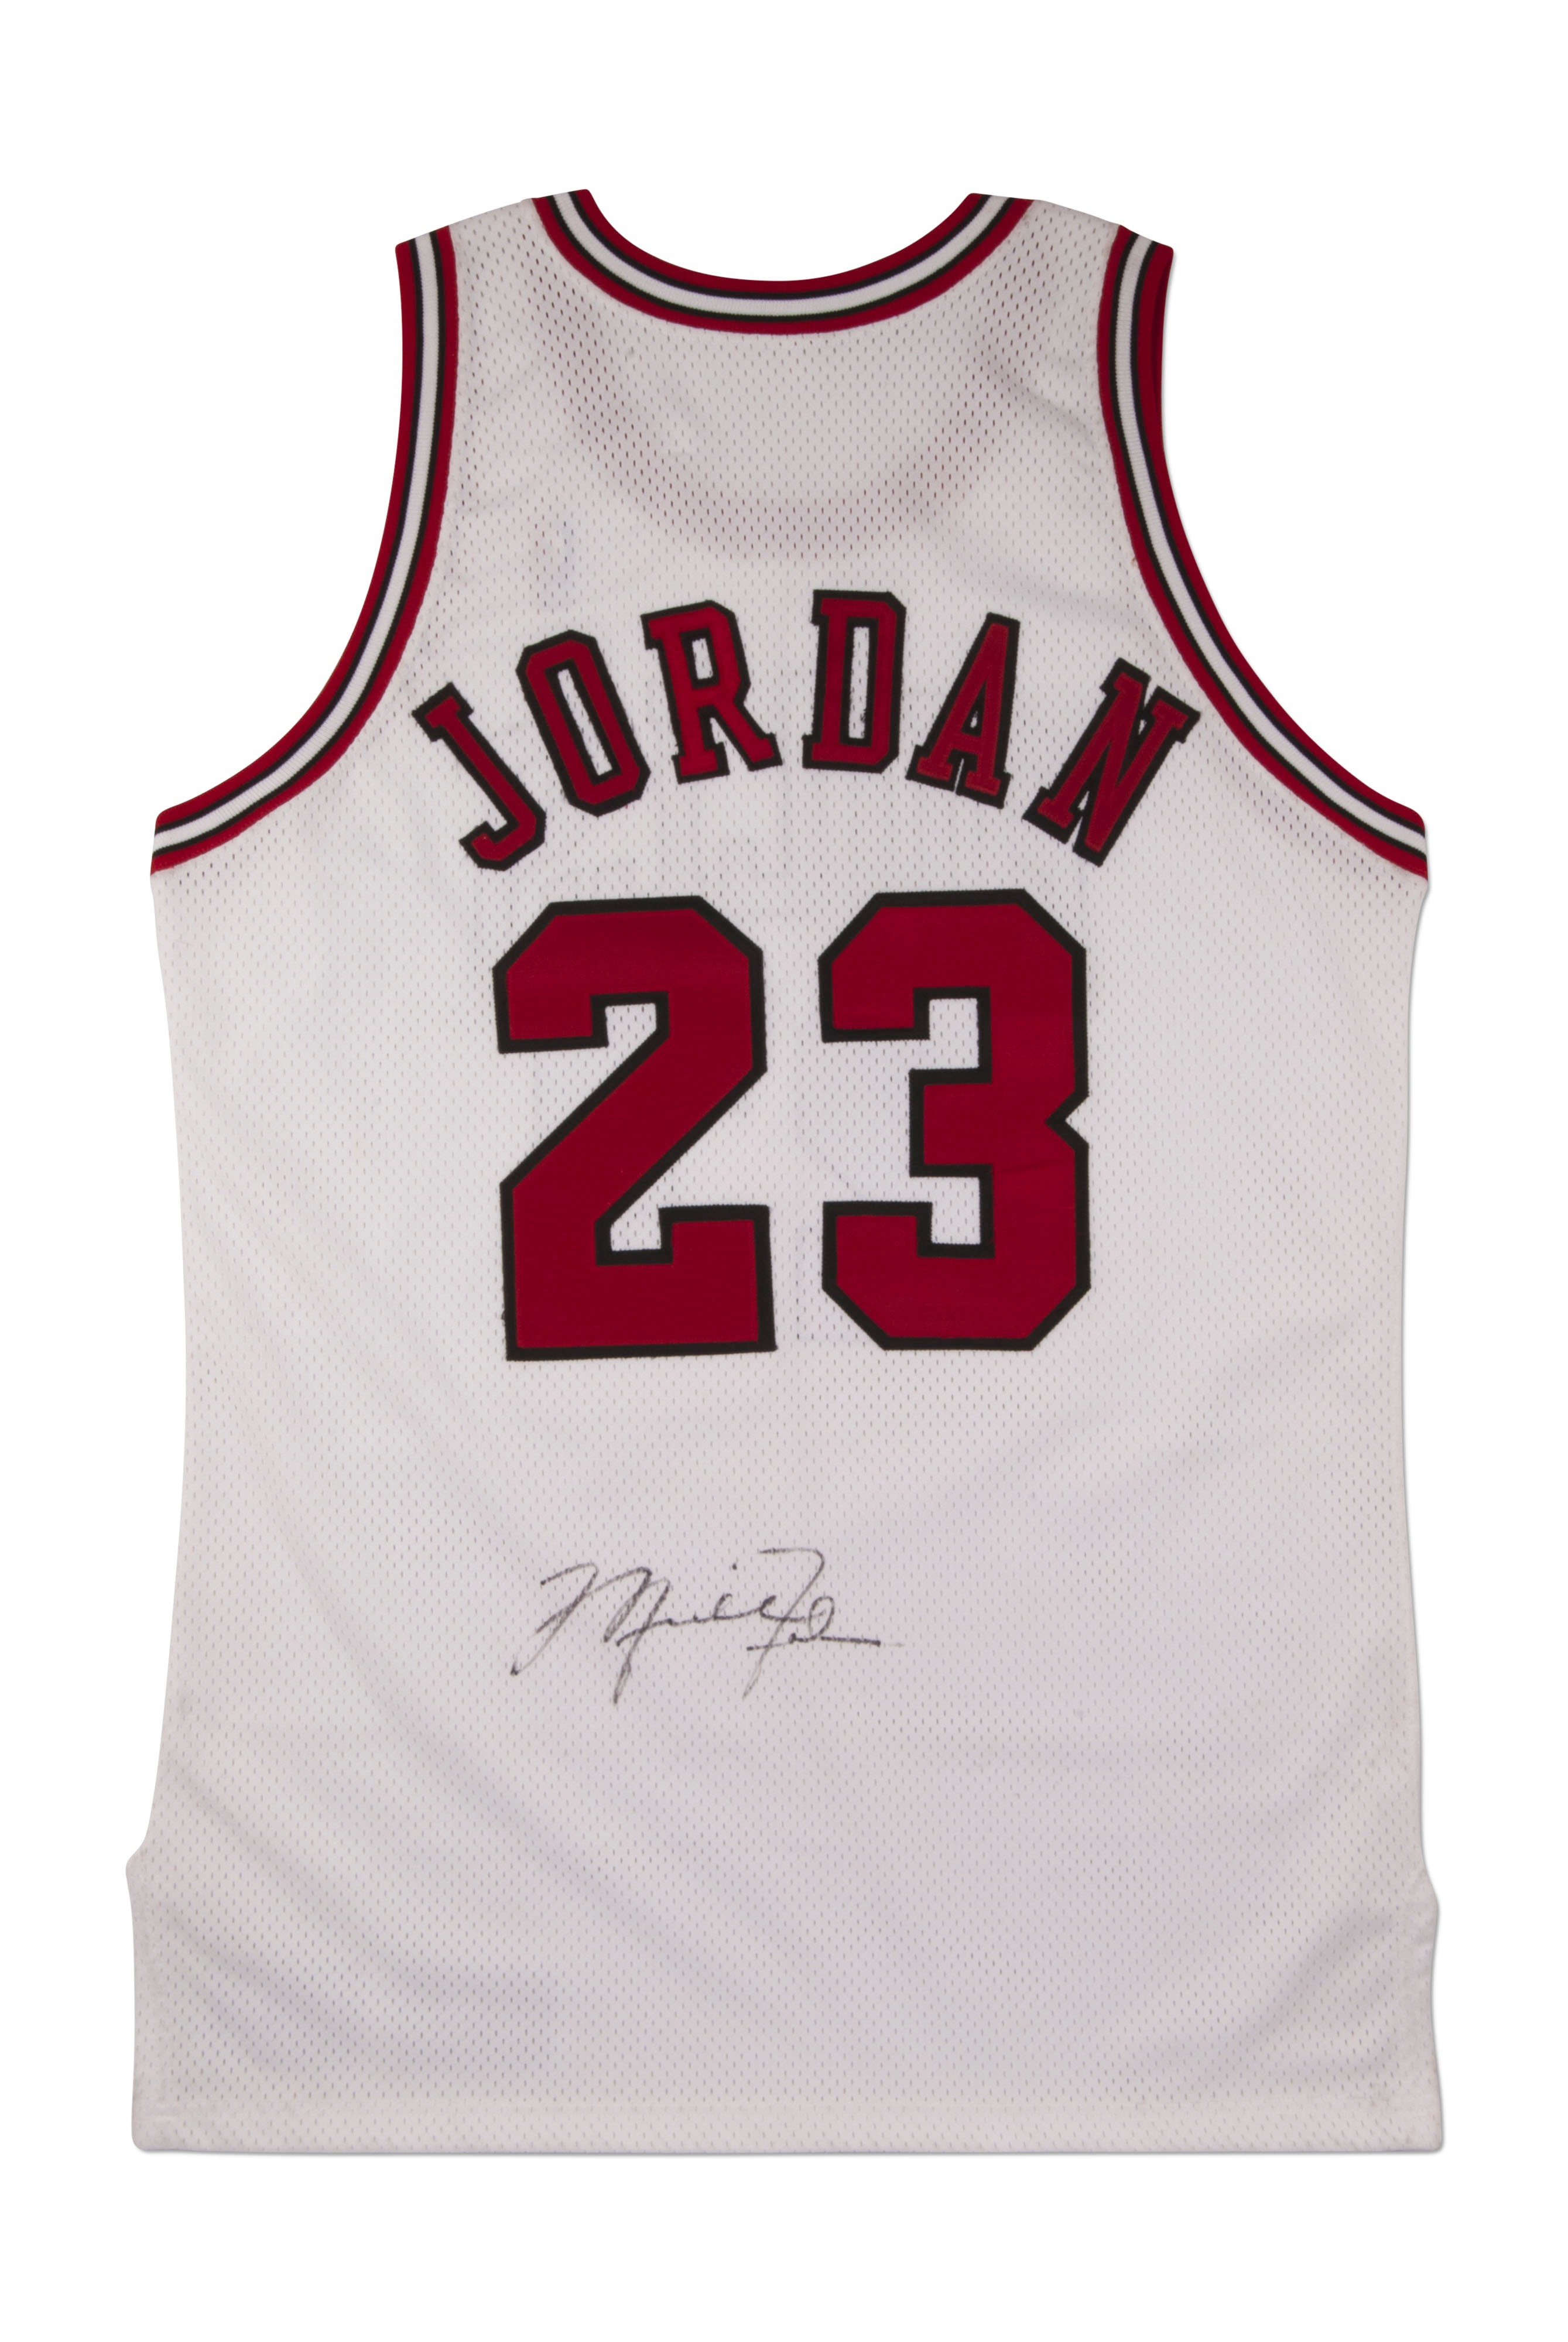 1992-93 Michael Jordan Autographed Game Worn Jersey